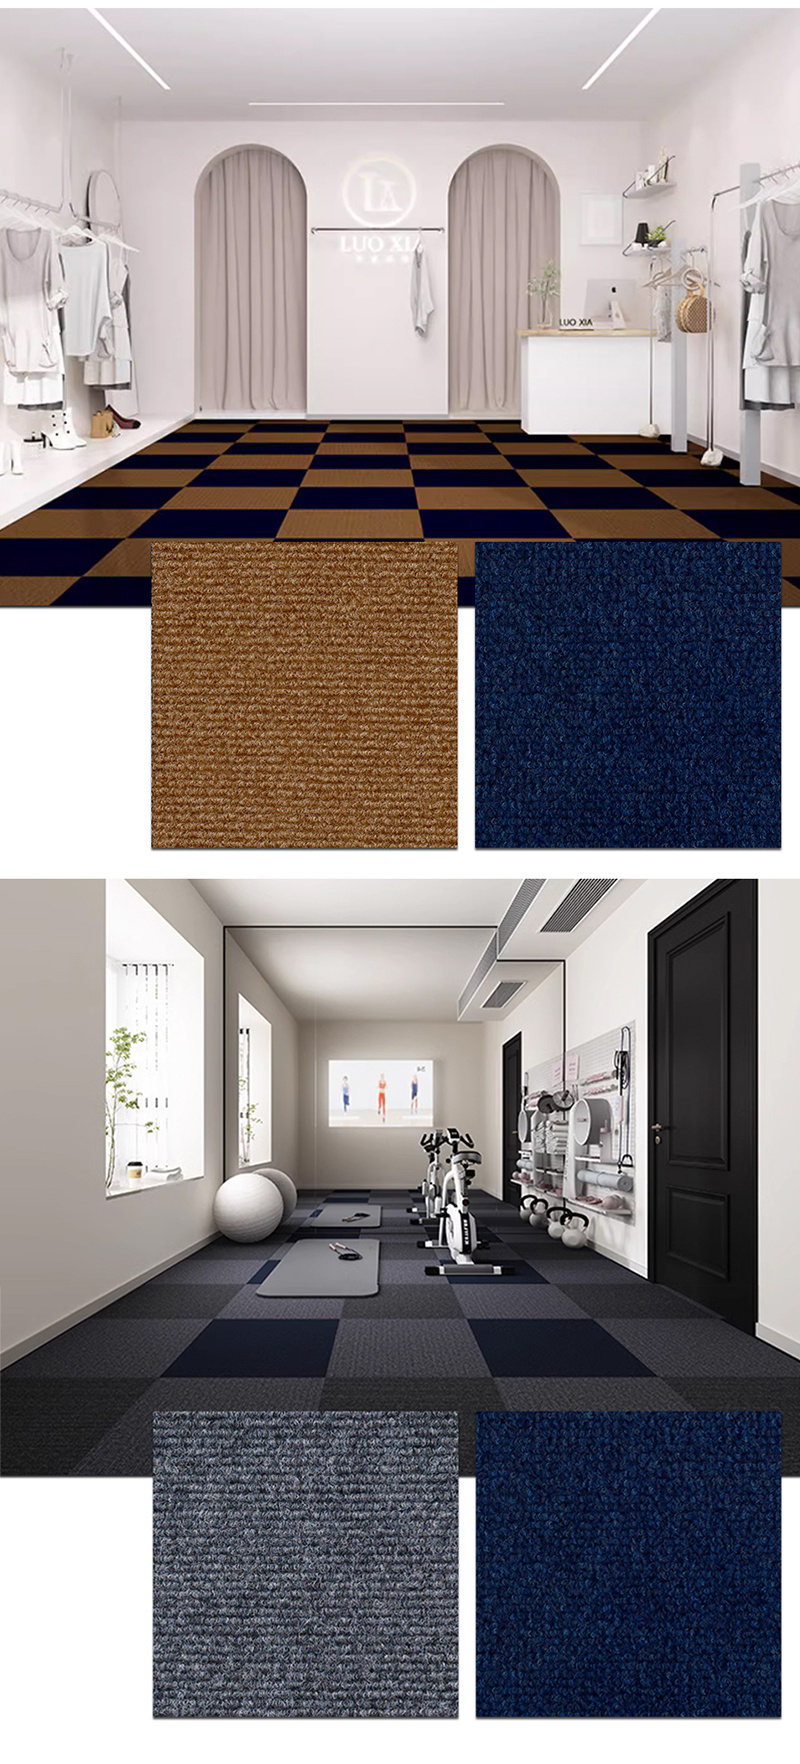 Carpet Floor Tiles Sticker 3/4/5pcs Adhesive Stickers Carpet Peel And Stick  Removable living room floor mat decor office carpets - AliExpress